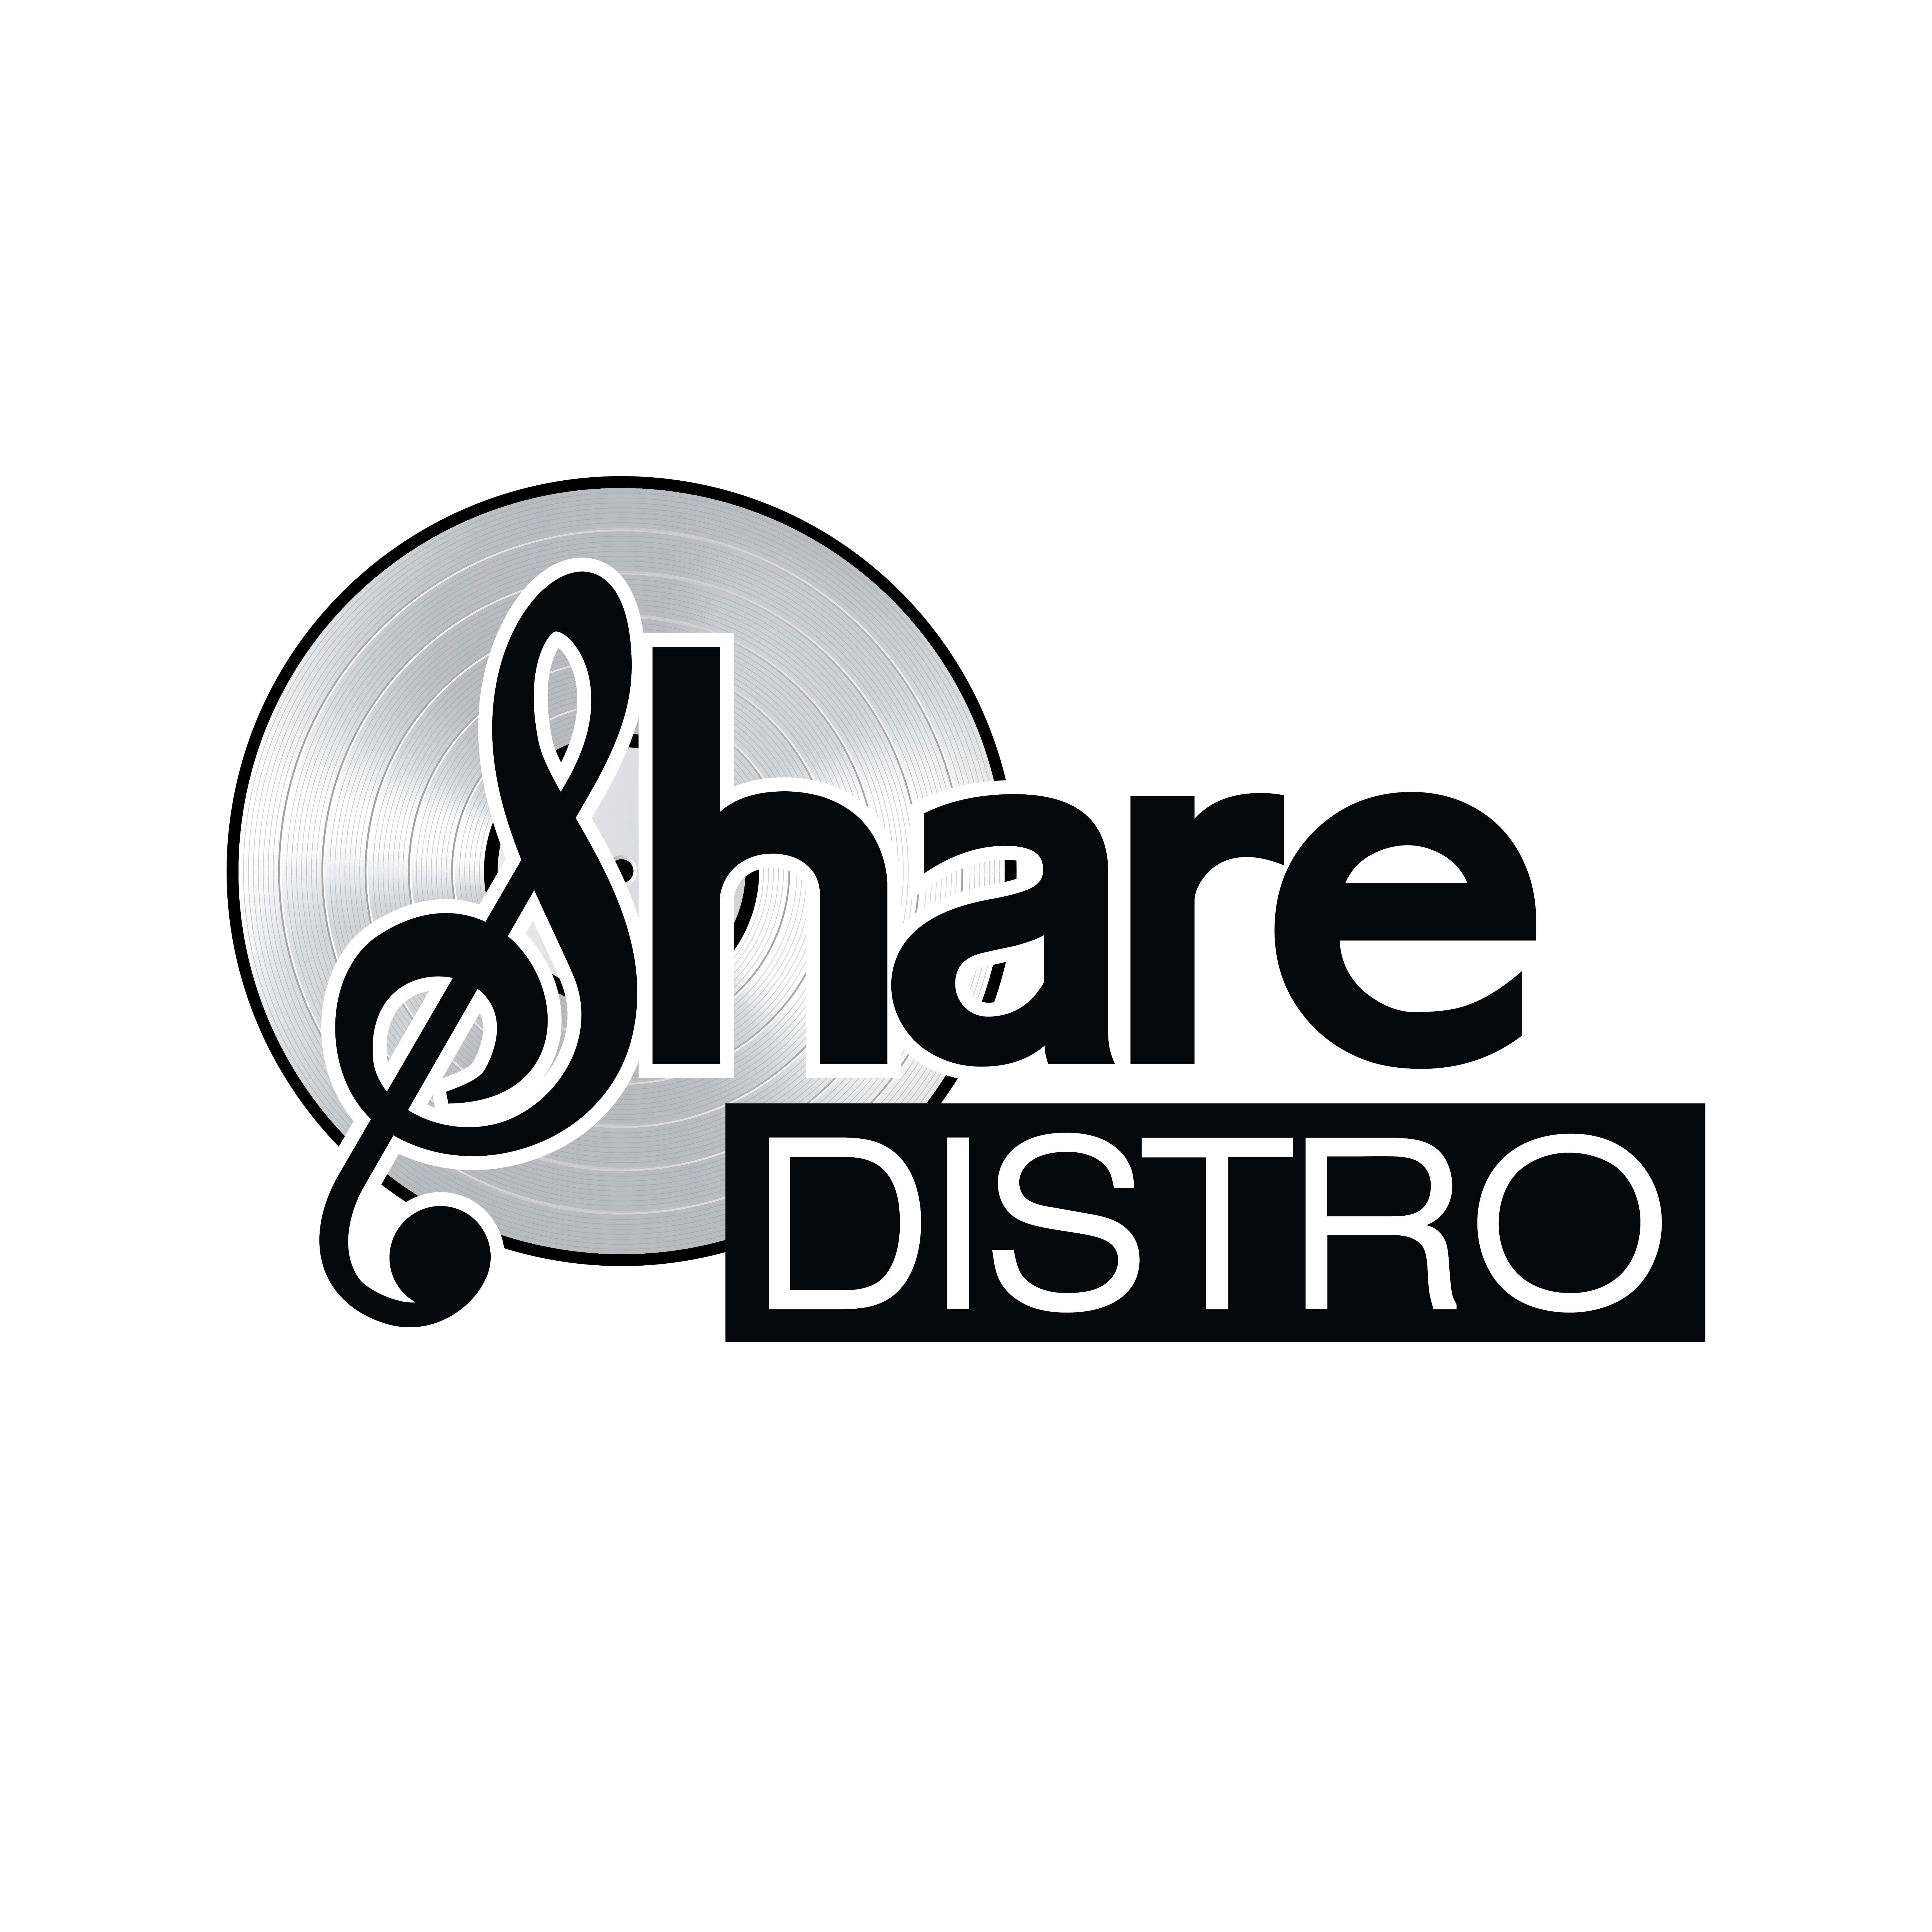 sharedistro Logo